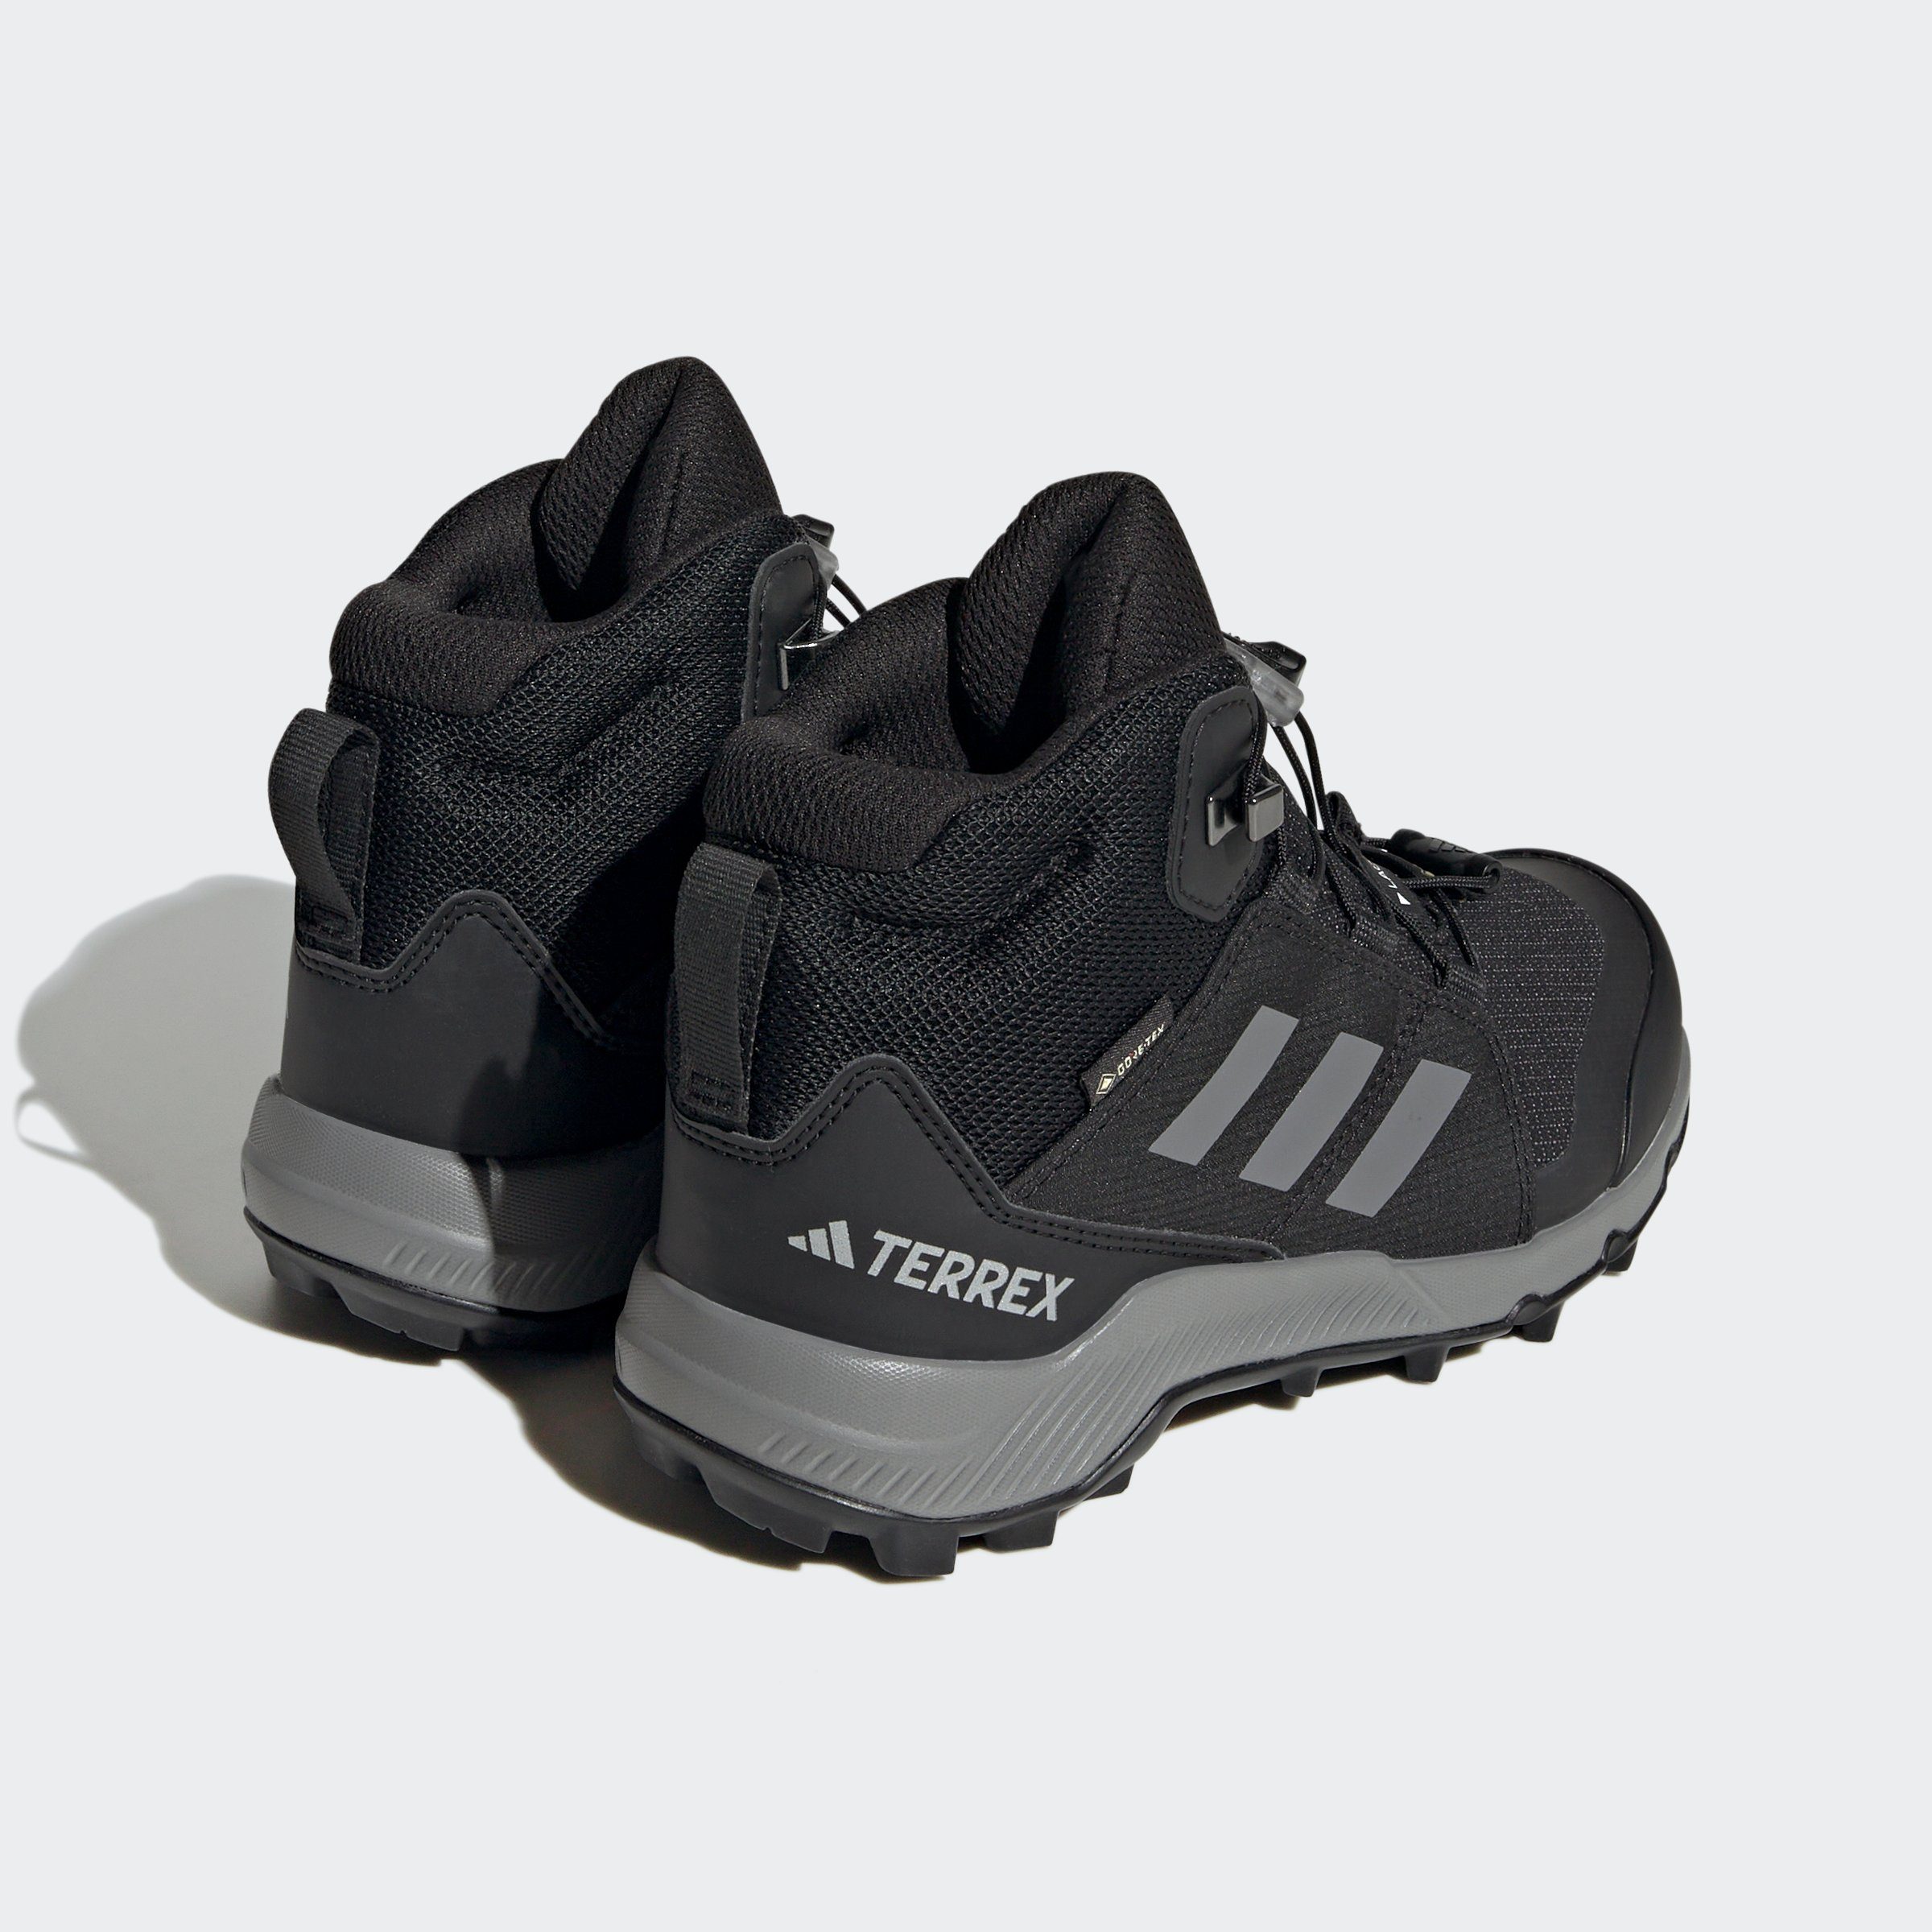 TERREX ORGANIZER Core Wanderschuh Three Black / Grey Black GORE-TEX wasserdicht Core / MID adidas